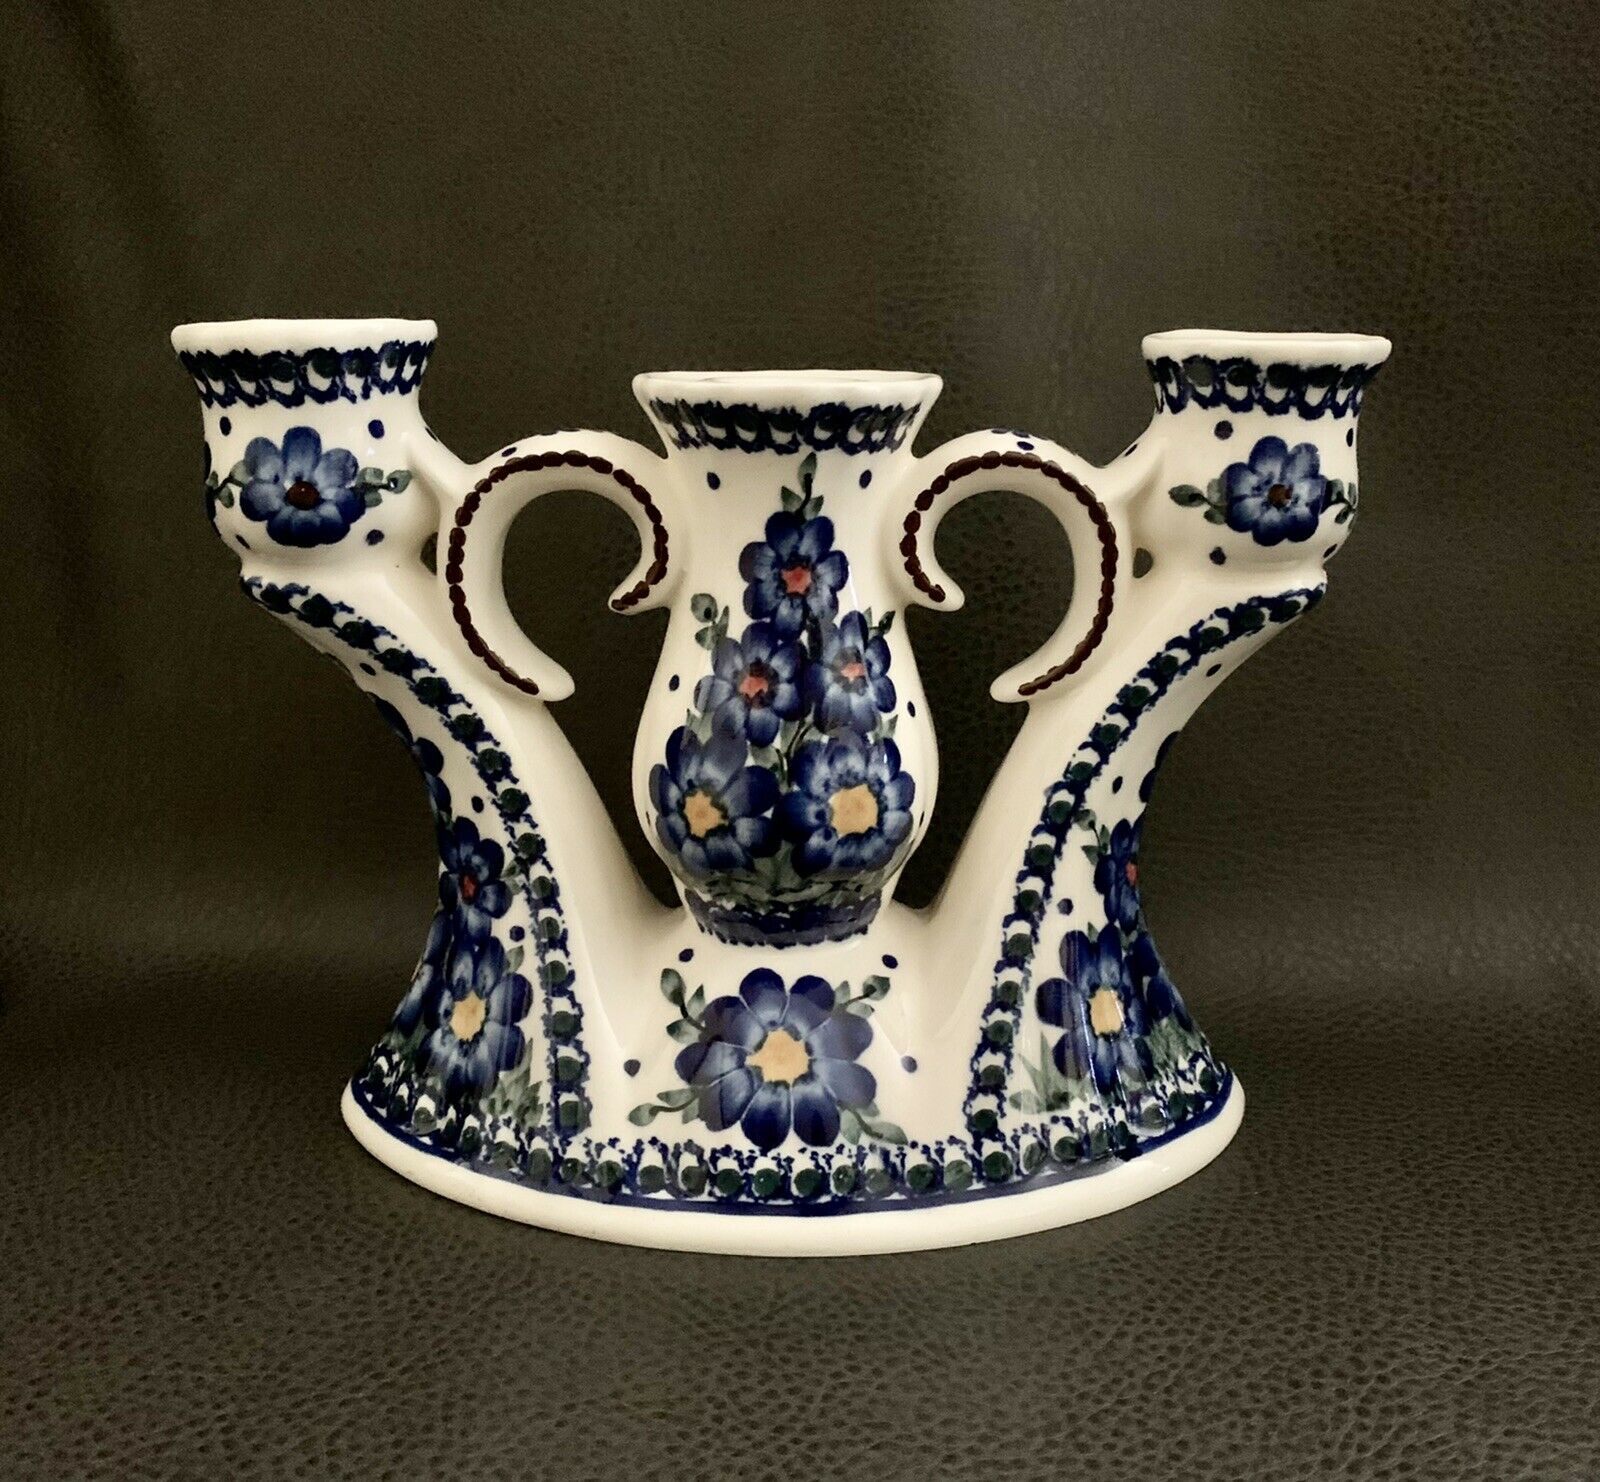 Bolelawiec Unikat Poland Pottery Flower Triple Candle Holder Cobalt Blue